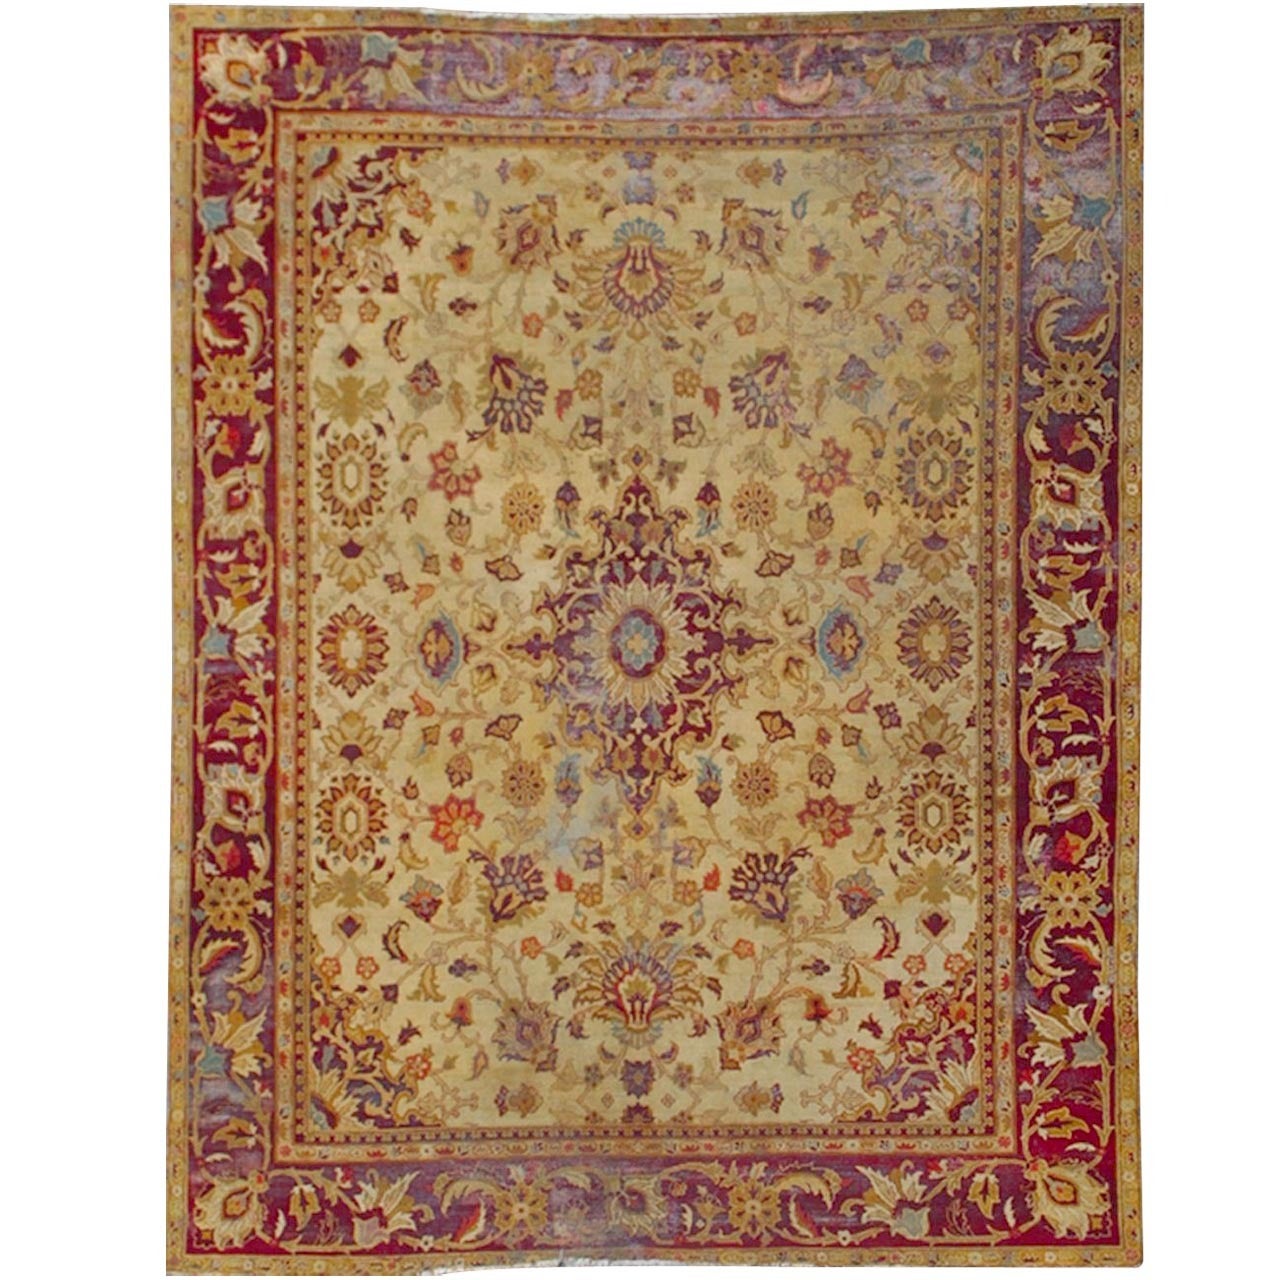 Unique Antique Indian Arga Carpet with Intricate Design and Saturated Colors